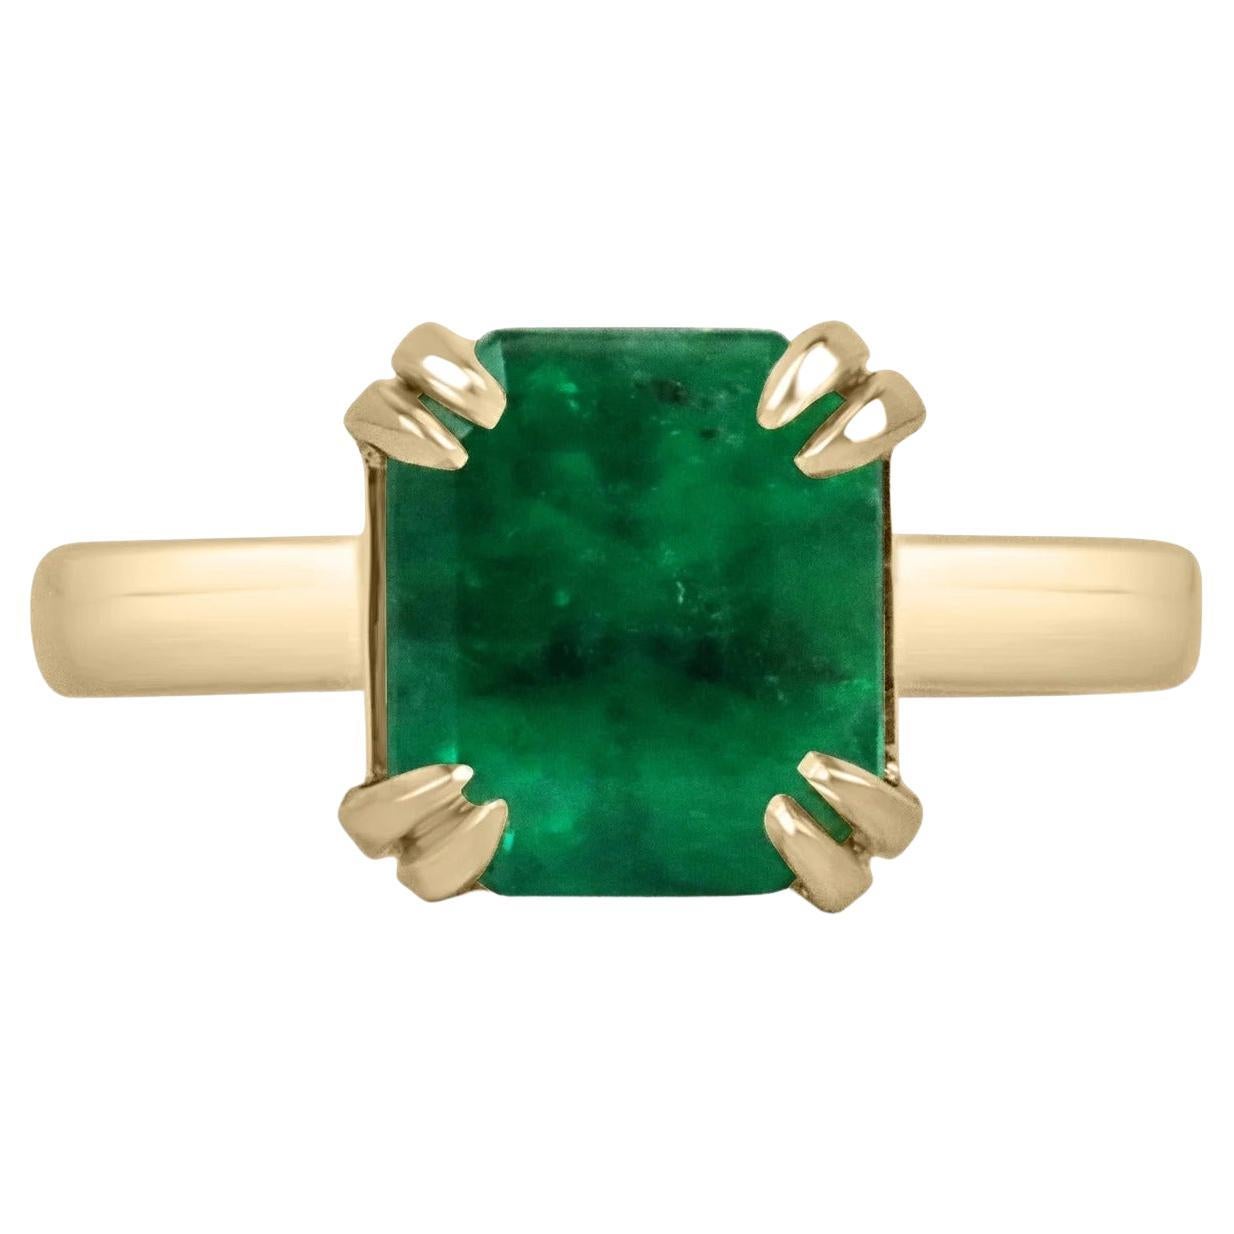 3.24 Carat AAA+ Colombian Emerald Asscher Cut, Double Prong Solitaire Ring 18K